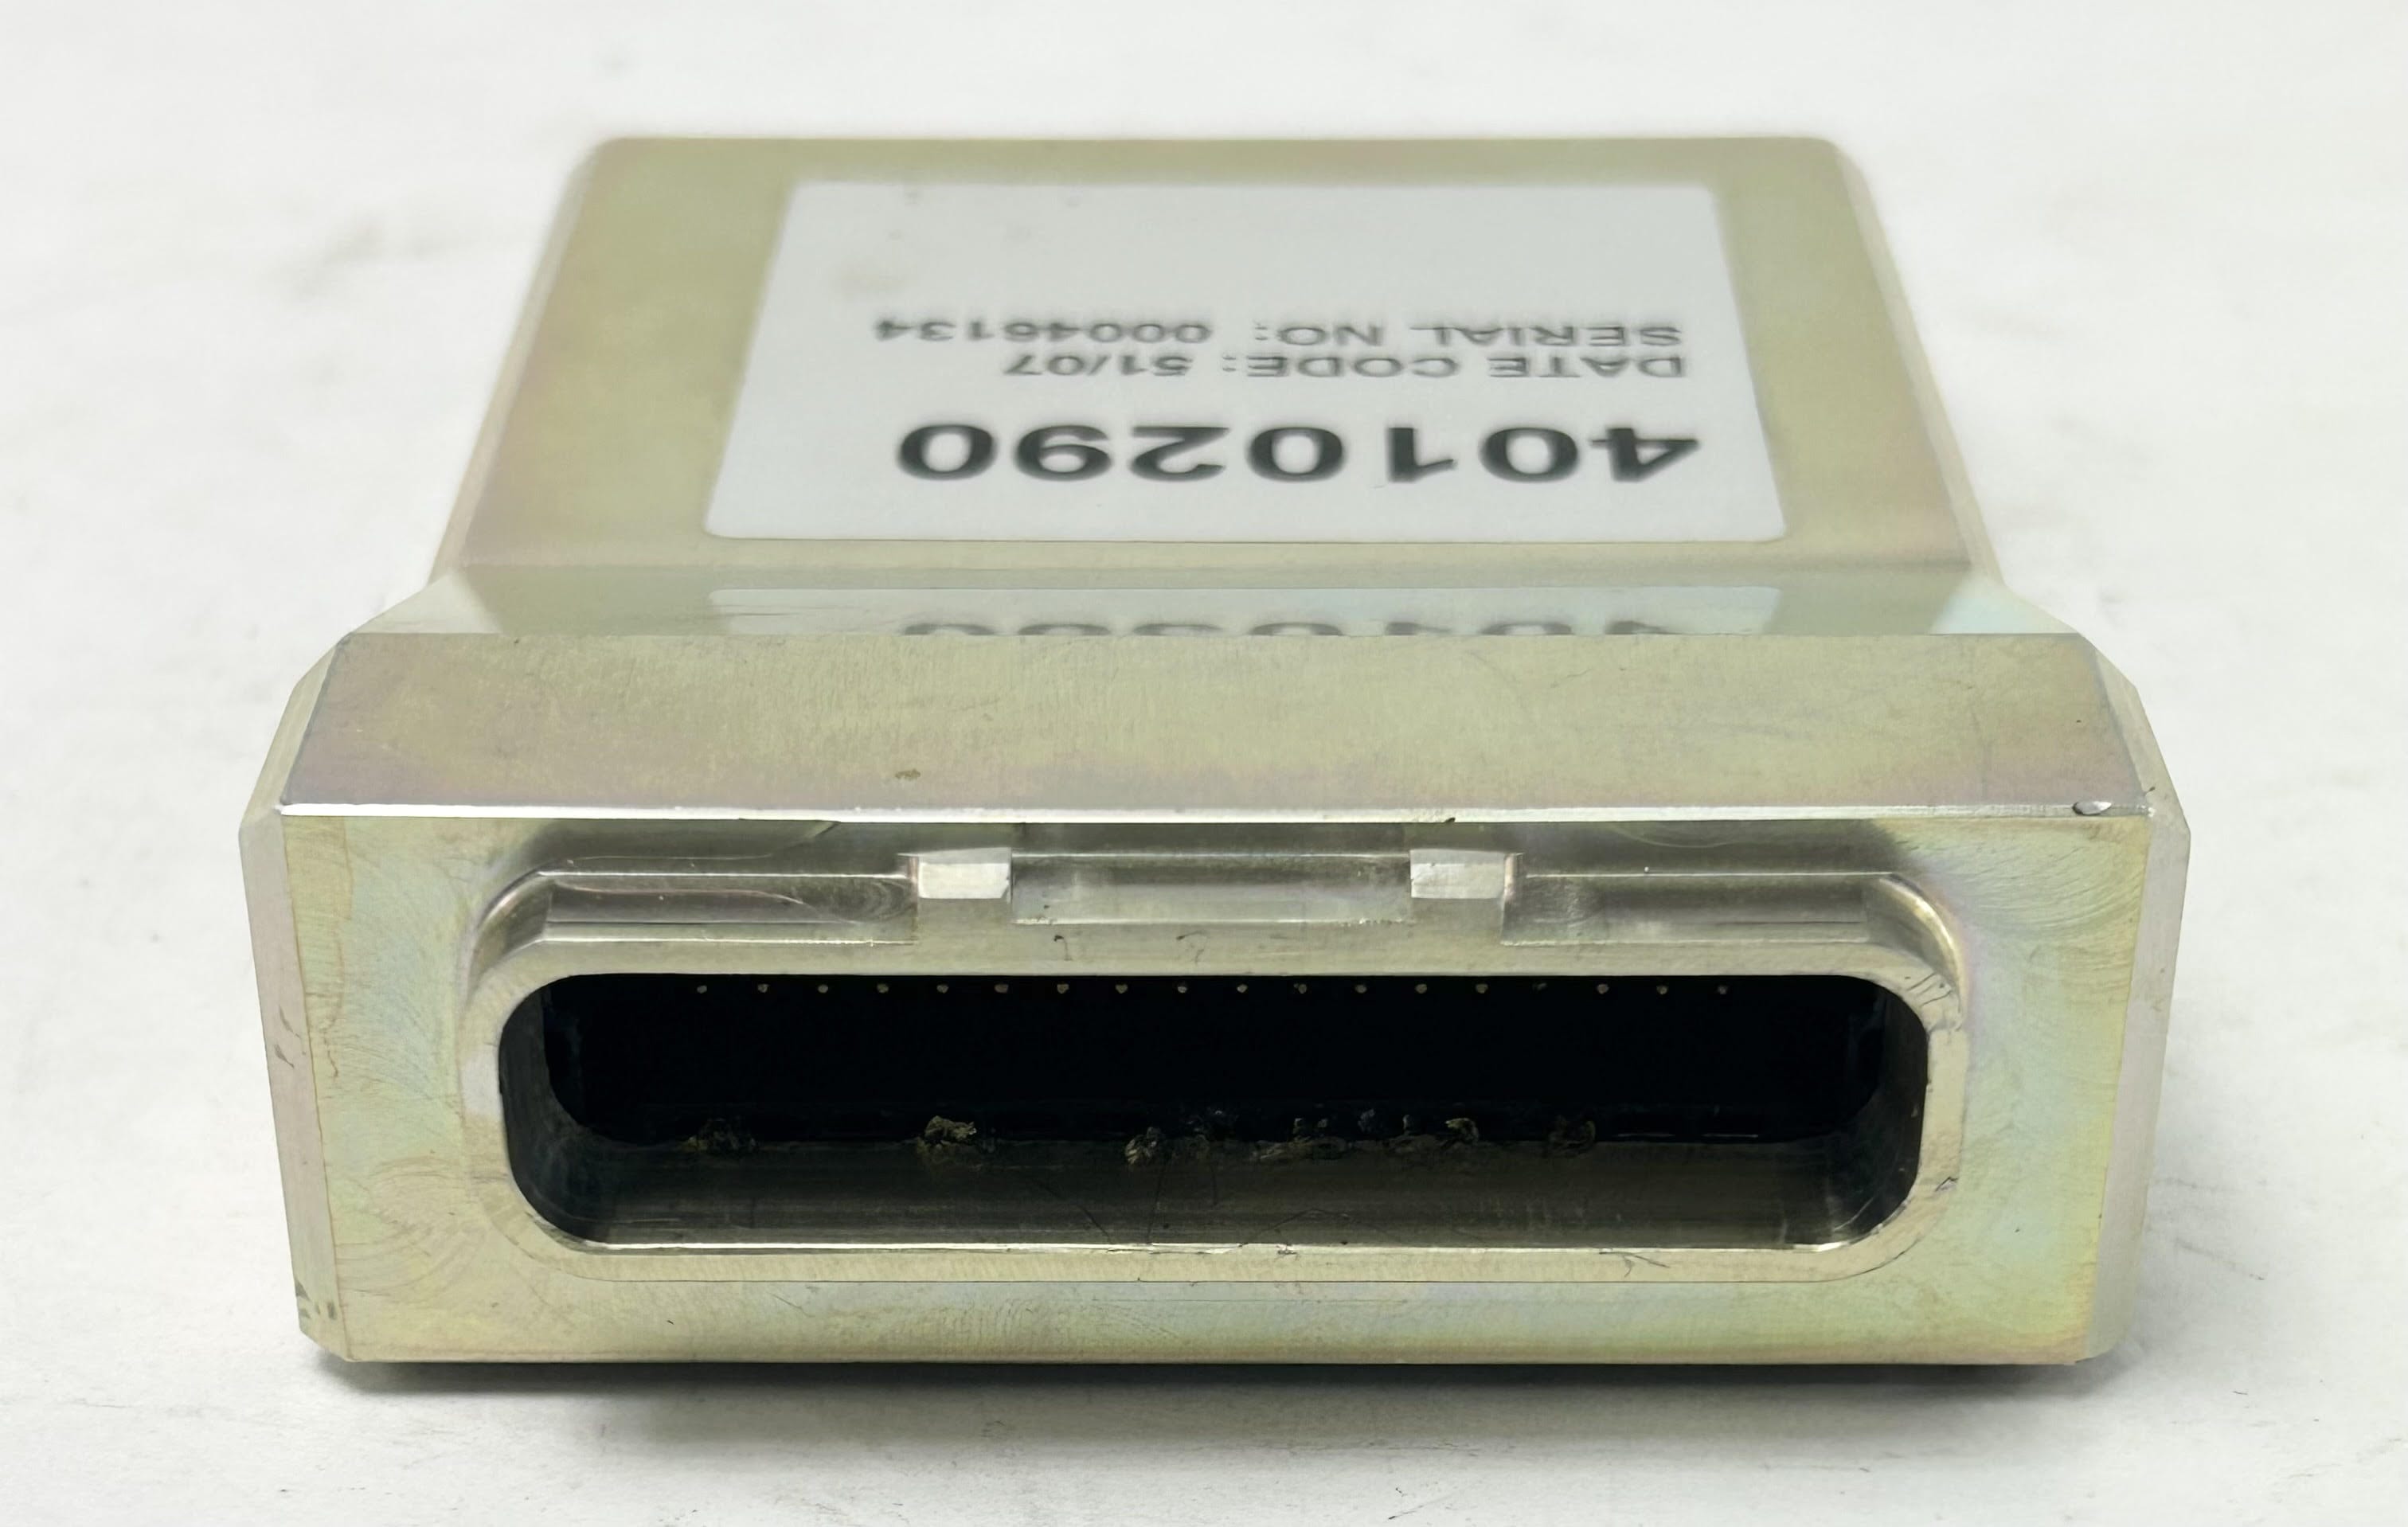 Off Road Express OEM Hardware Ecm,V92 W/O Chip by Polaris 4010290